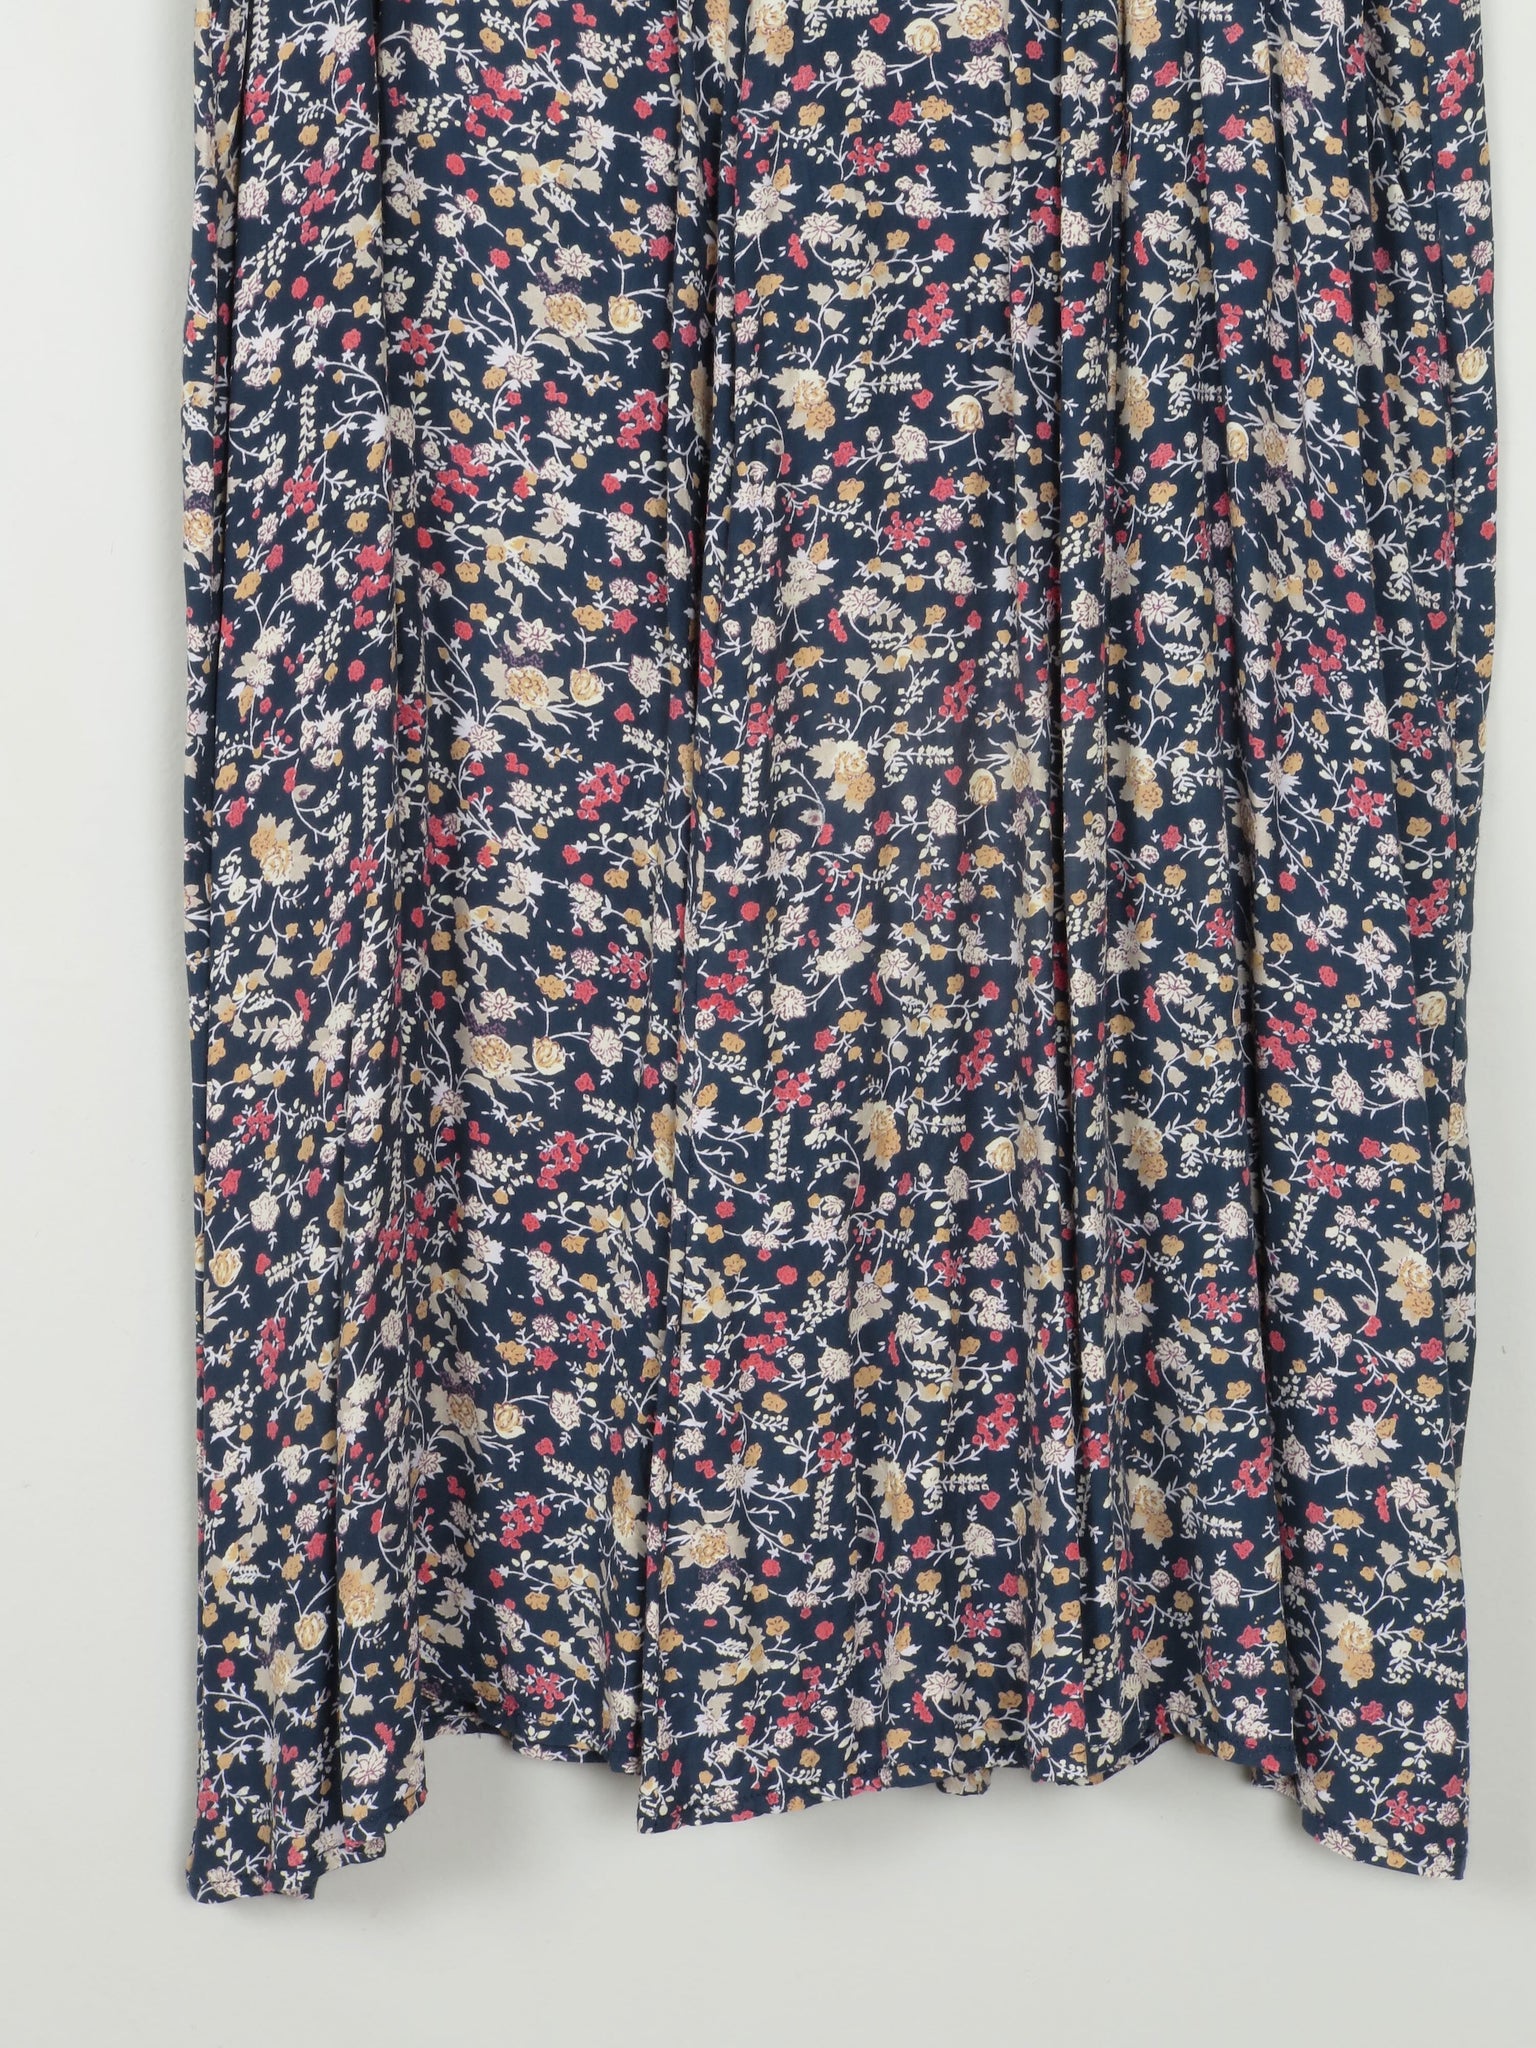 Vintage Floral Button Down Skirt L - The Harlequin